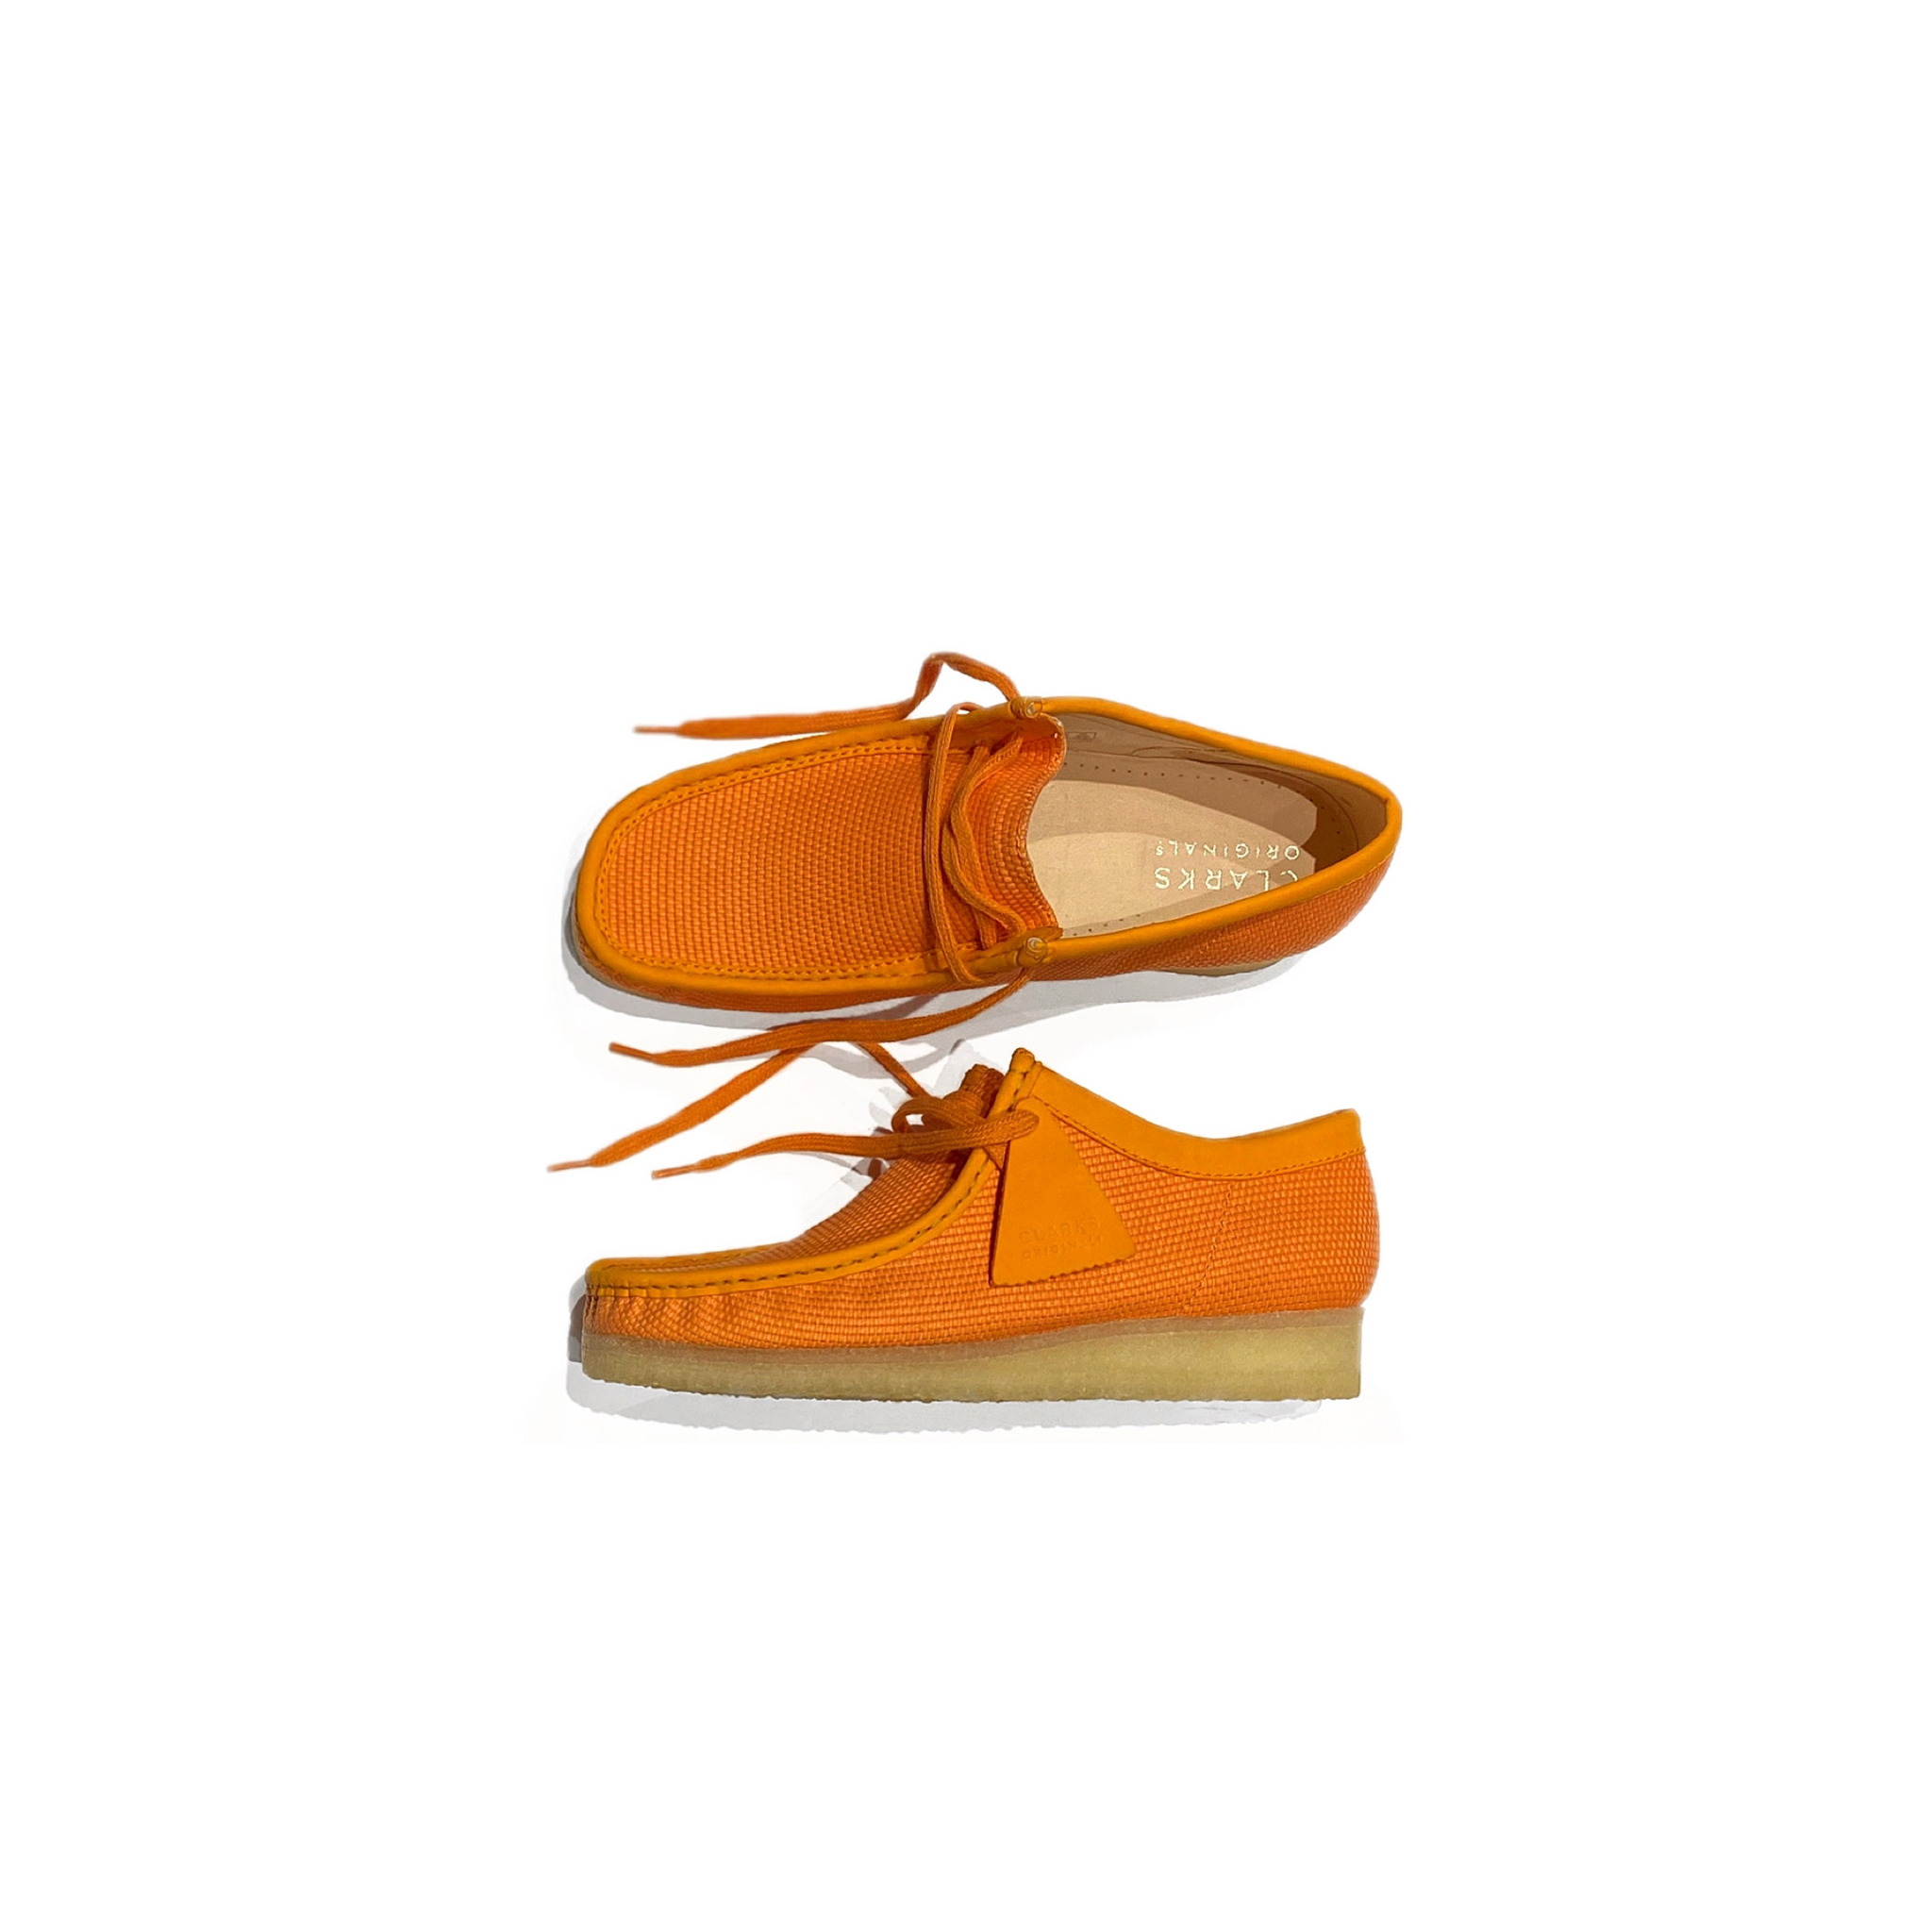 clarks orange shoes